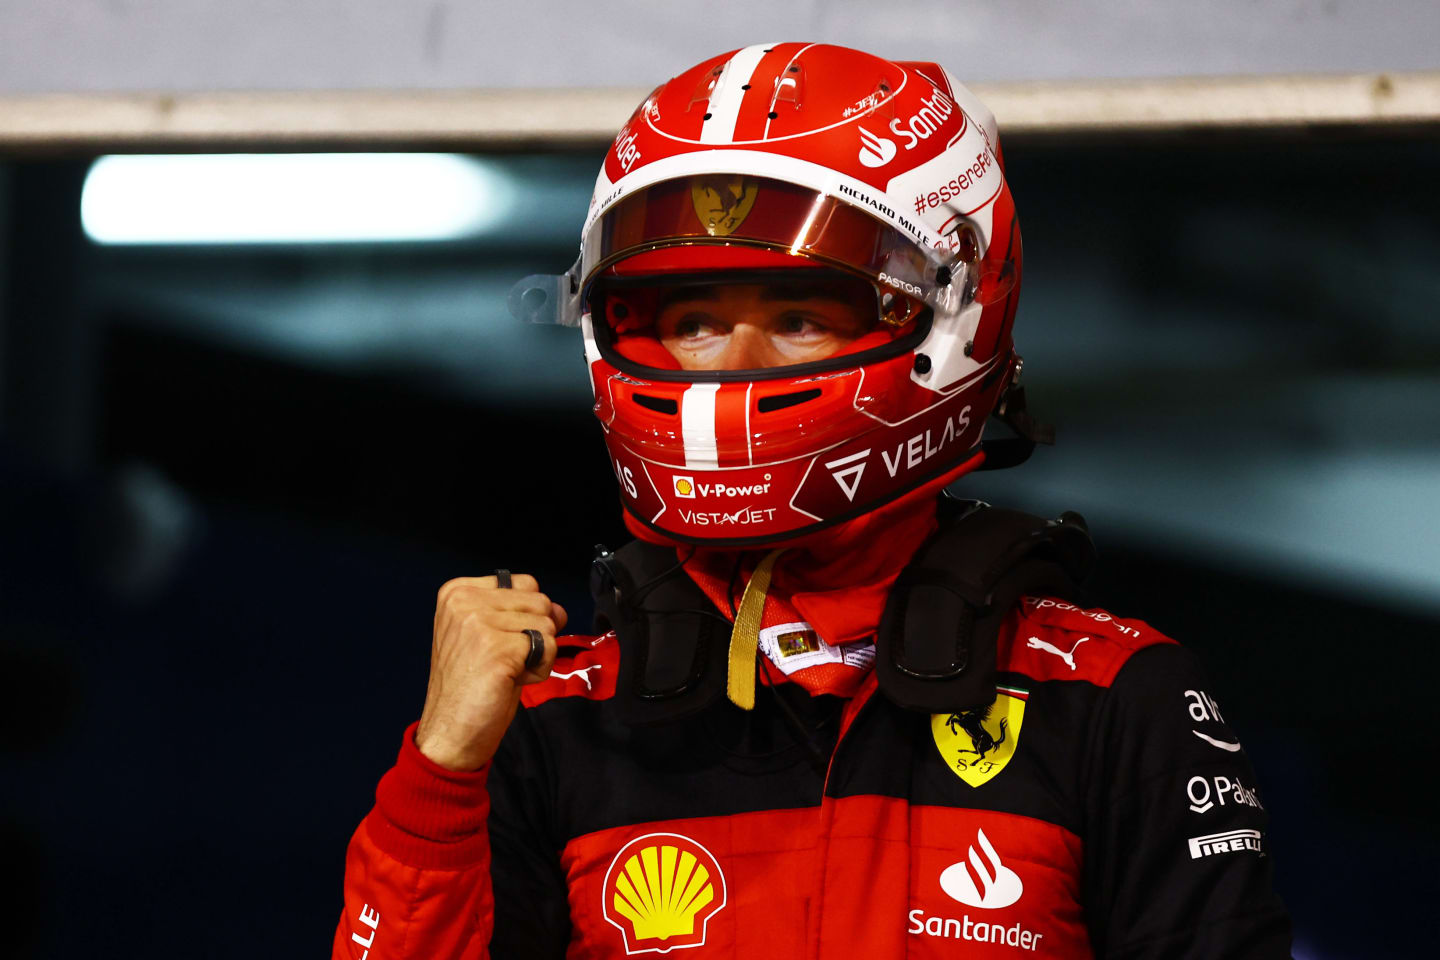 BAHRAIN, BAHRAIN - MARCH 19: Pole position qualifier Charles Leclerc of Monaco and Ferrari